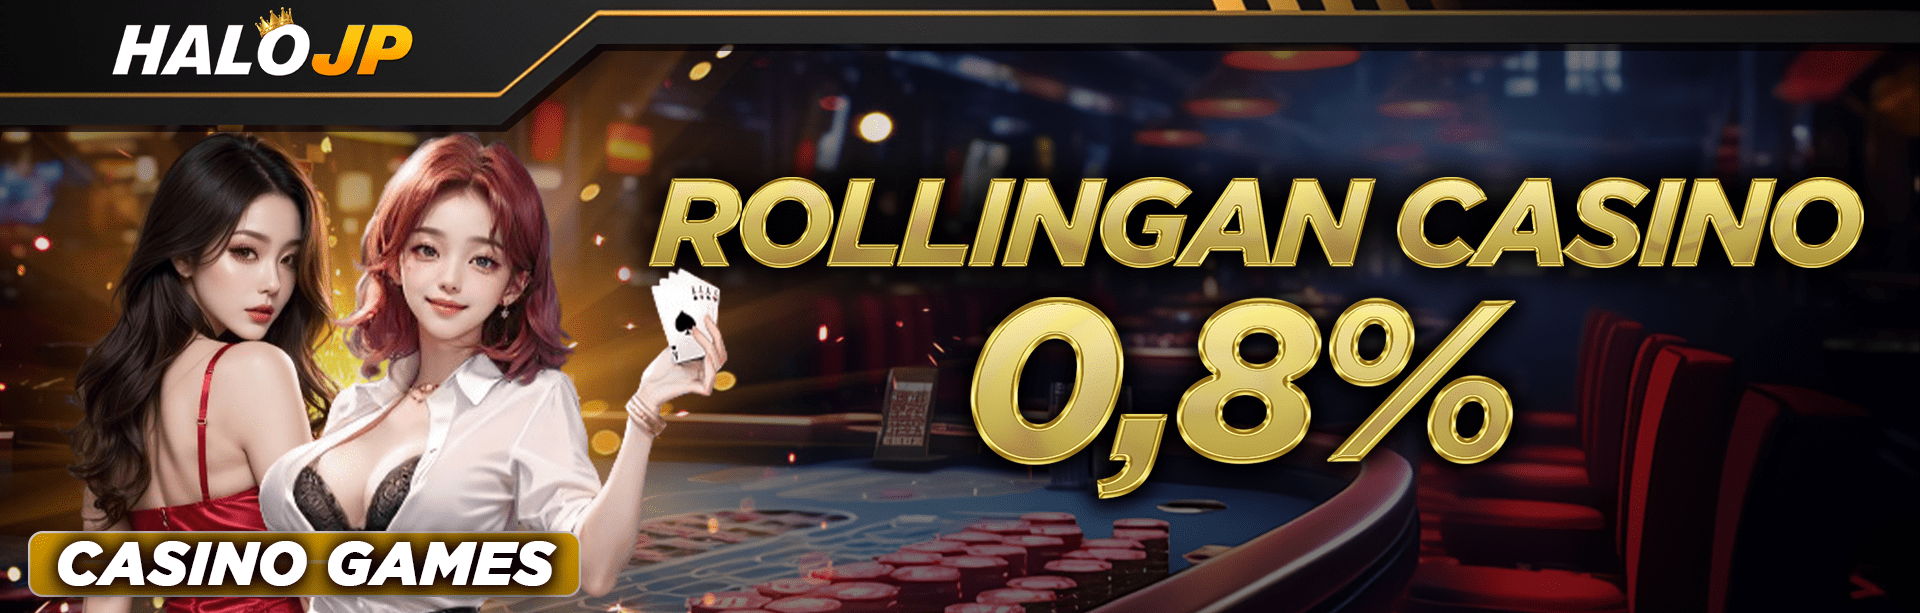 Rollingan Casino